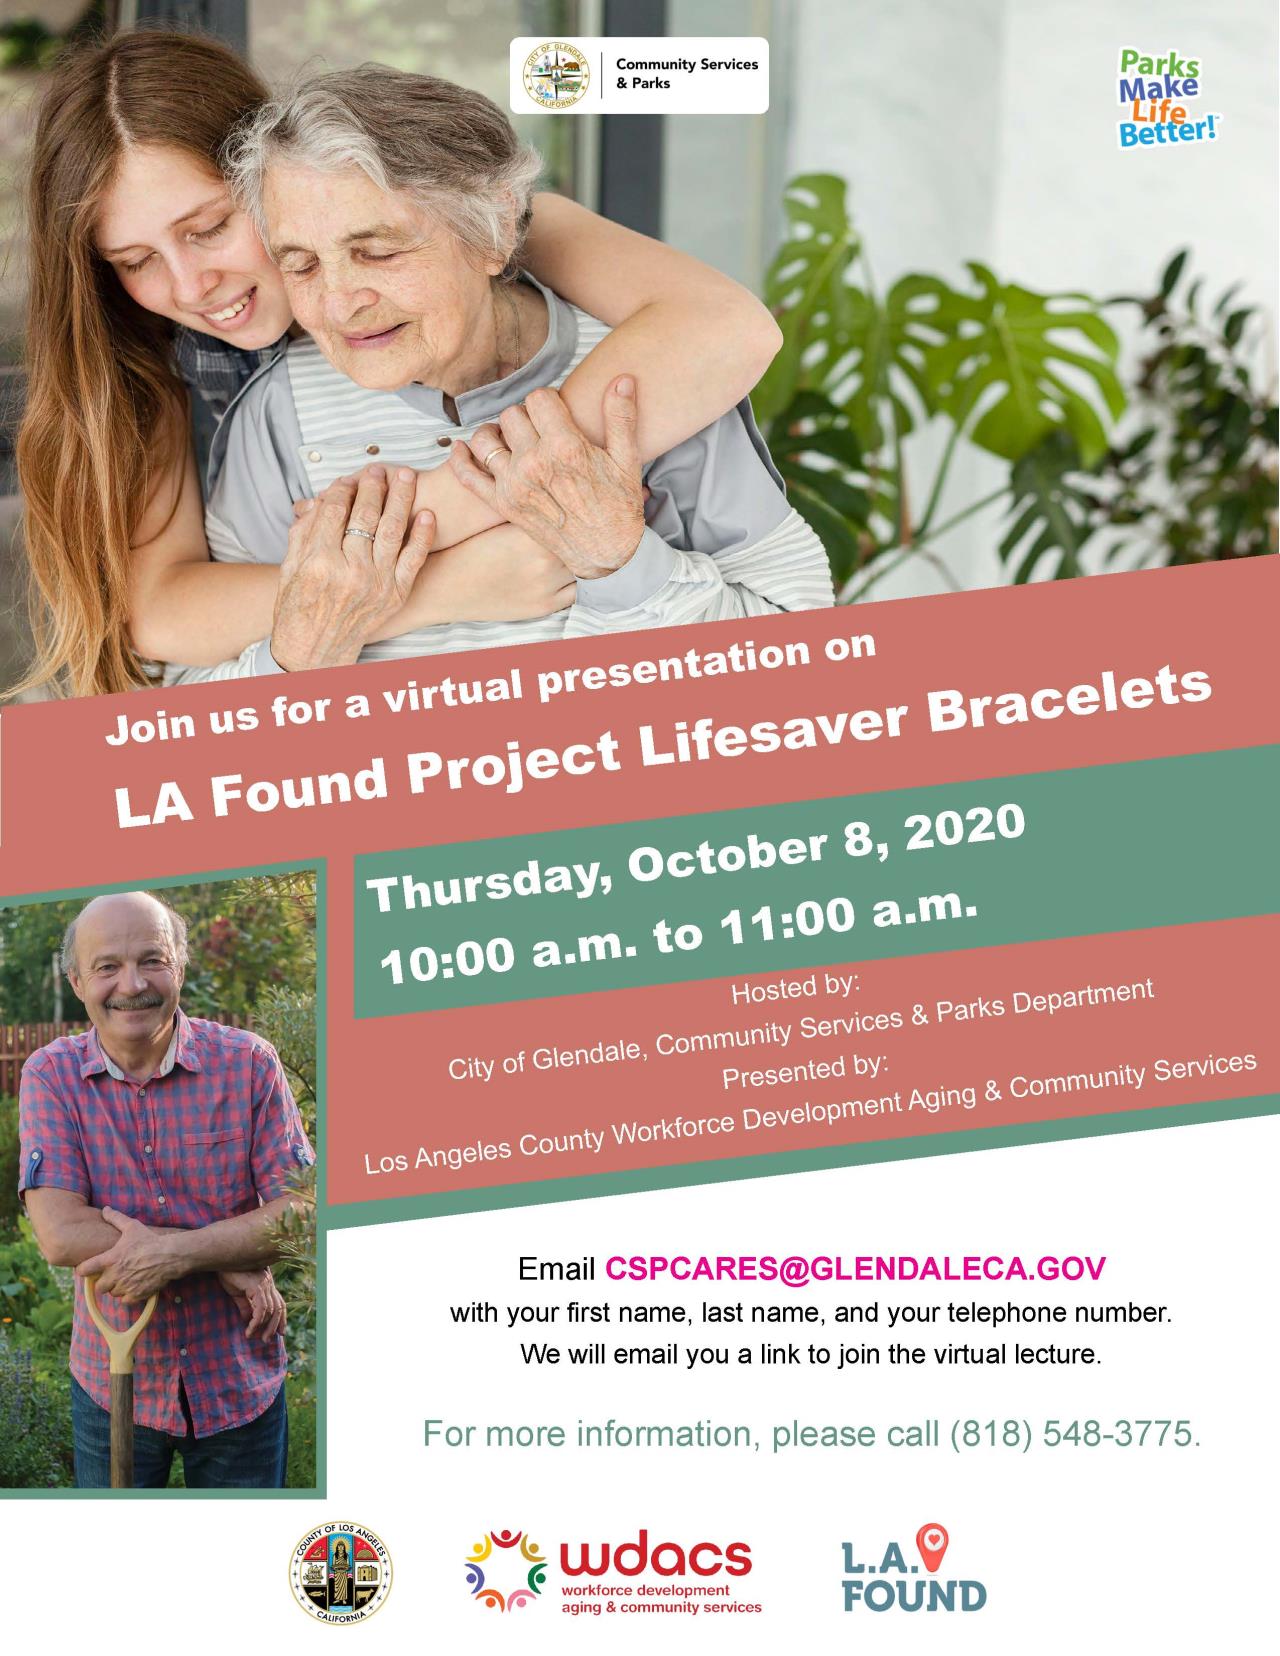 LA Found Project flyer 9-16